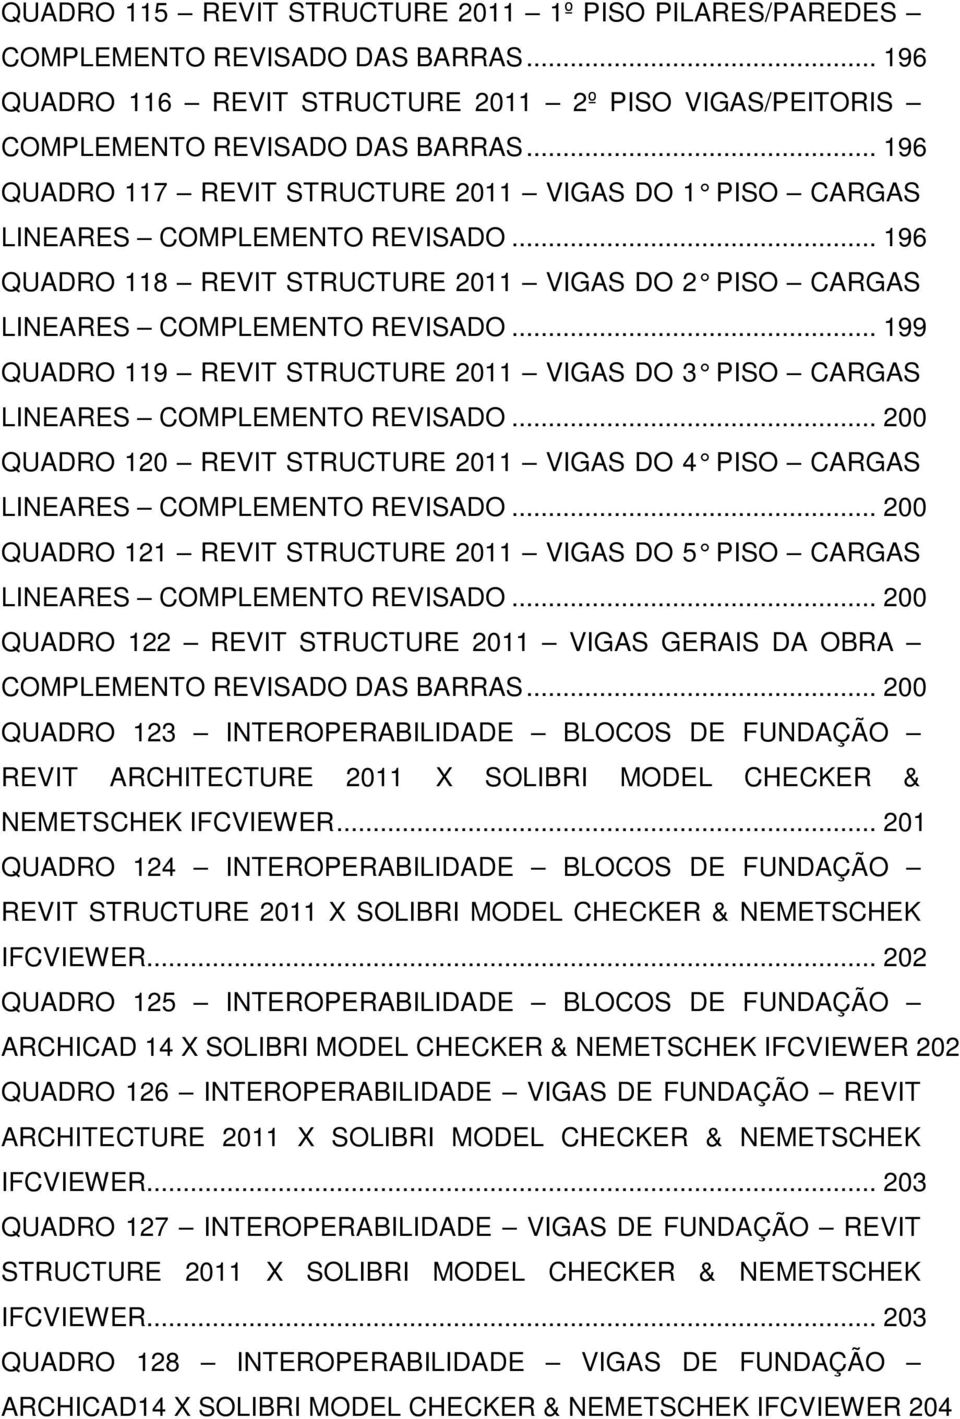 .. 199 QUADRO 119 REVIT STRUCTURE 2011 VIGAS DO 3 PISO CARGAS LINEARES COMPLEMENTO REVISADO... 200 QUADRO 120 REVIT STRUCTURE 2011 VIGAS DO 4 PISO CARGAS LINEARES COMPLEMENTO REVISADO.